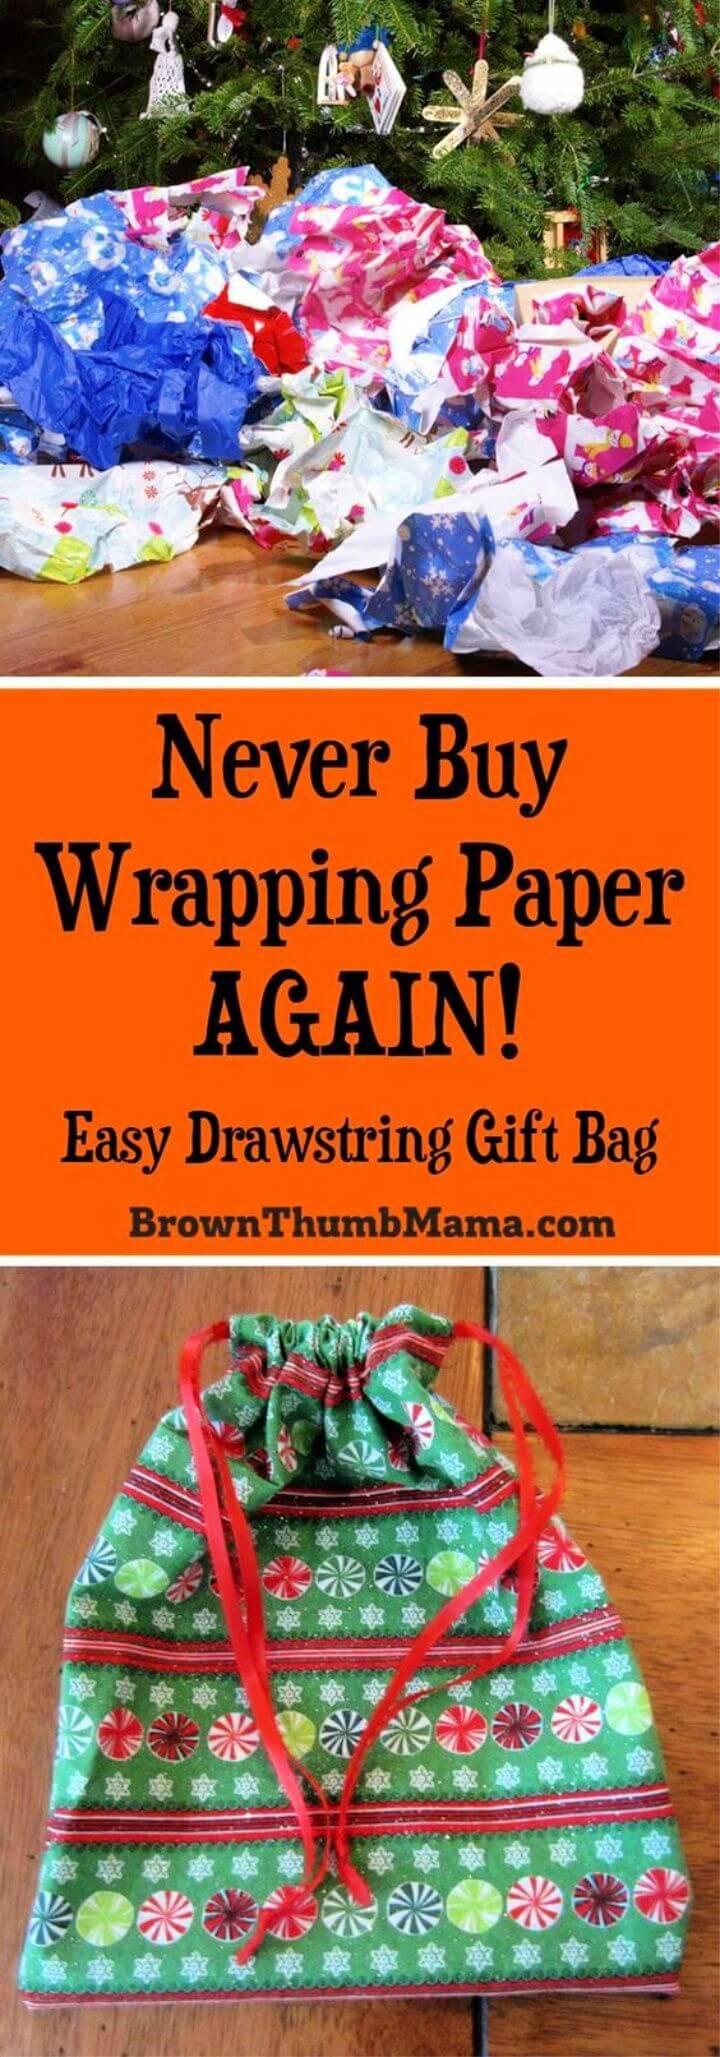 Sew an Easy Drawstring Gift Bag